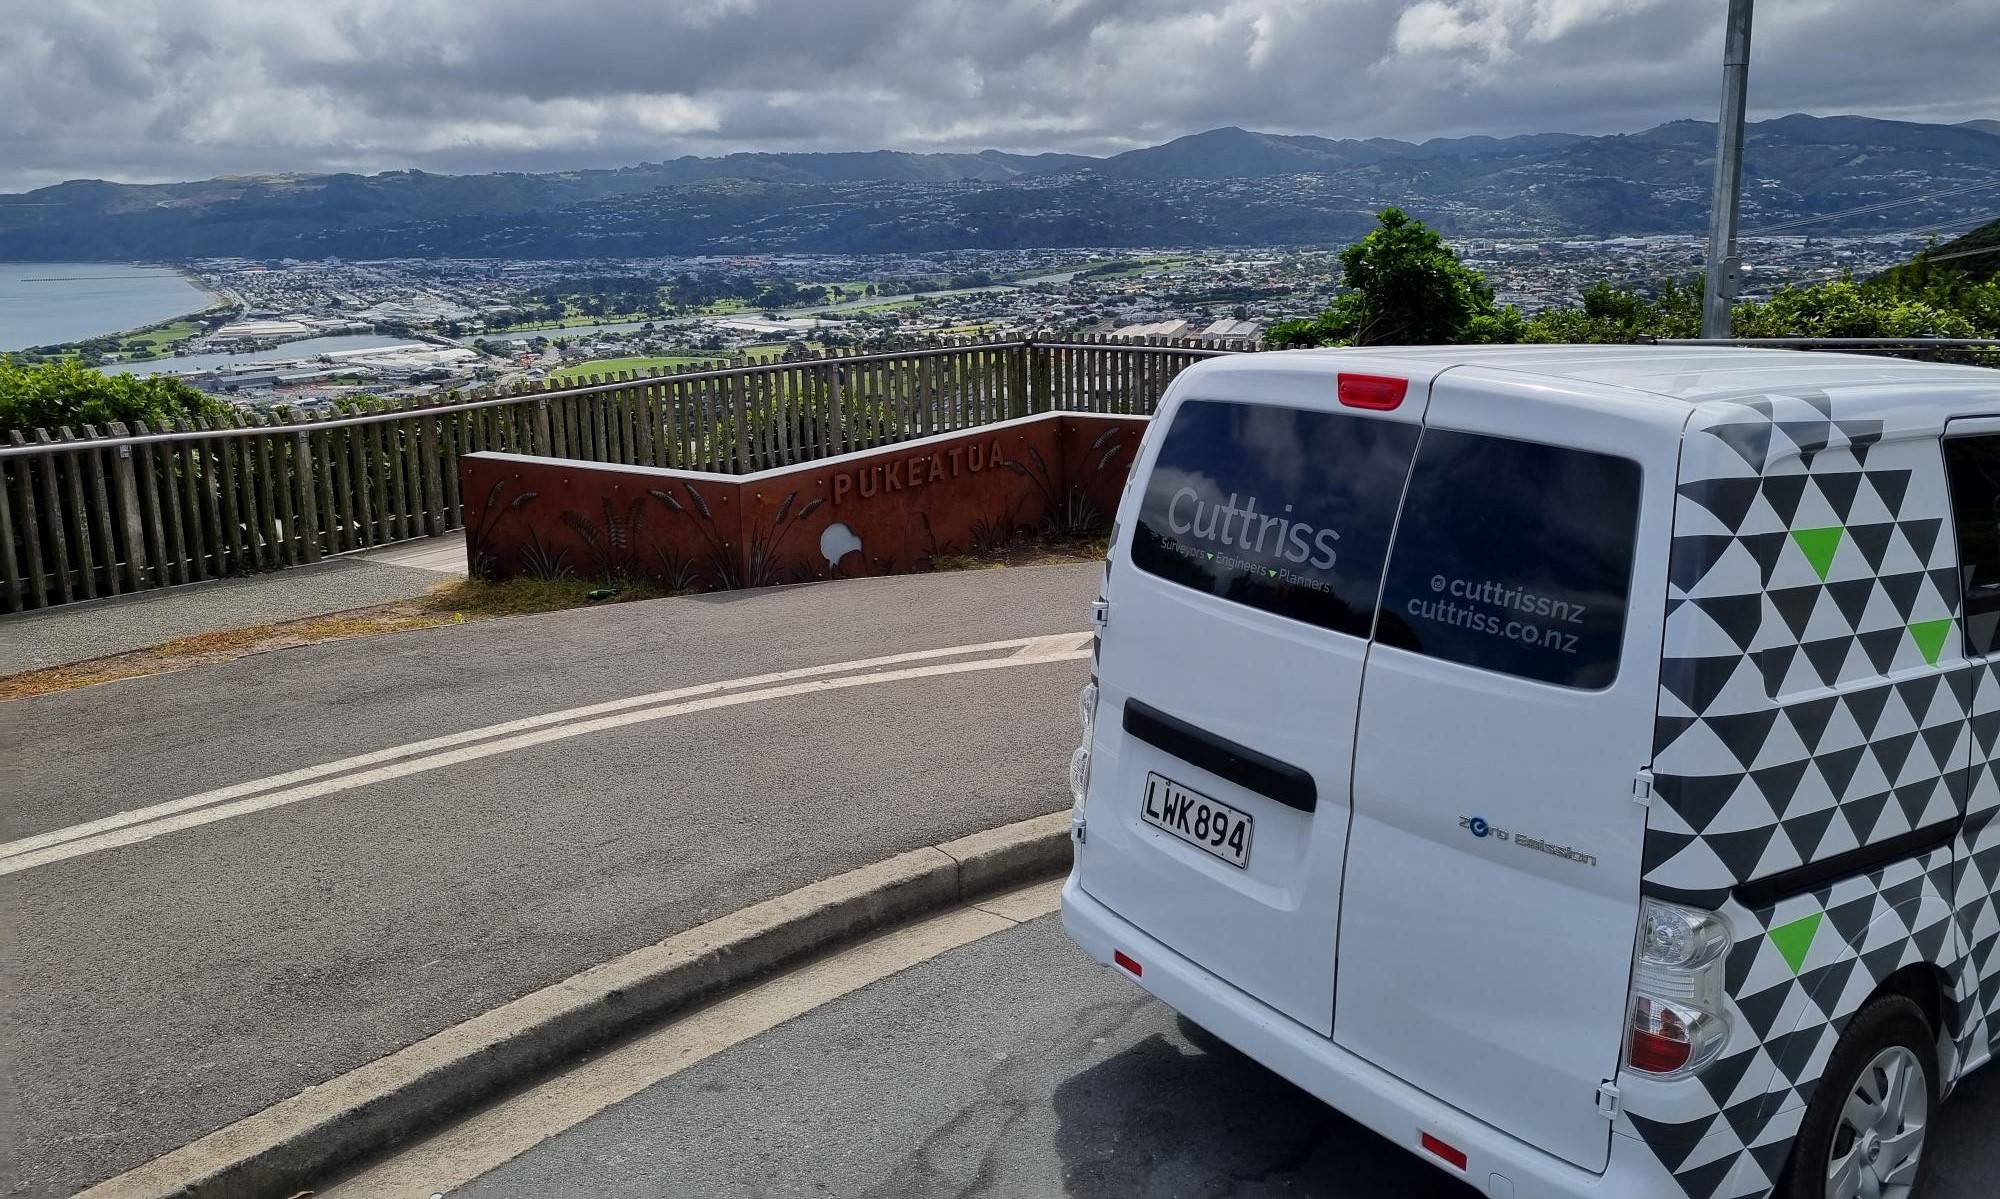 Cuttriss van on a hilltop site in Wellington